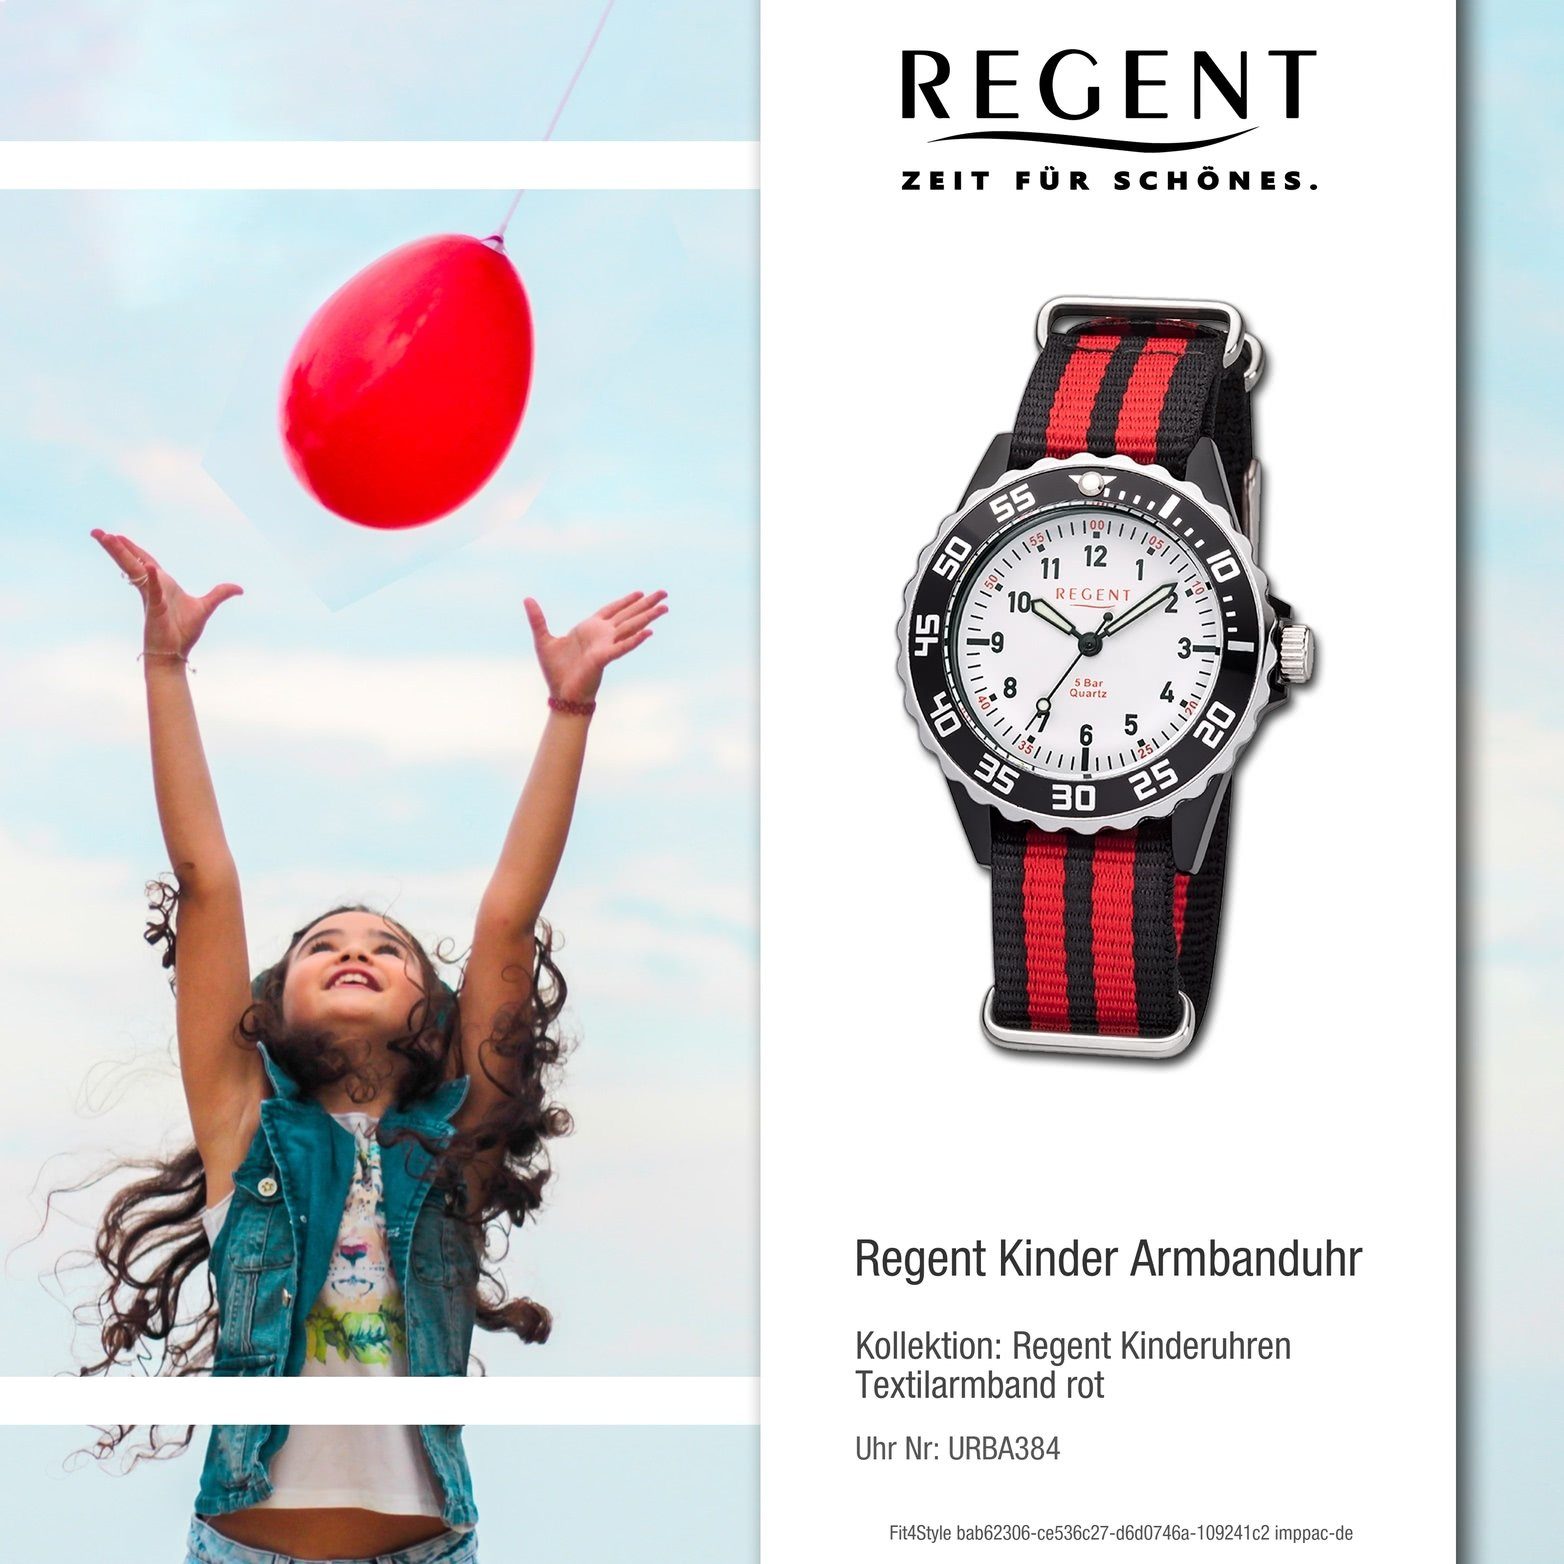 Kinder-Jugend Textil rot, (35mm) mittel schwarz, Textilarmband Gehäuse, Regent Quarzuhr Uhr rundes F-1205, Regent Kinderuhr